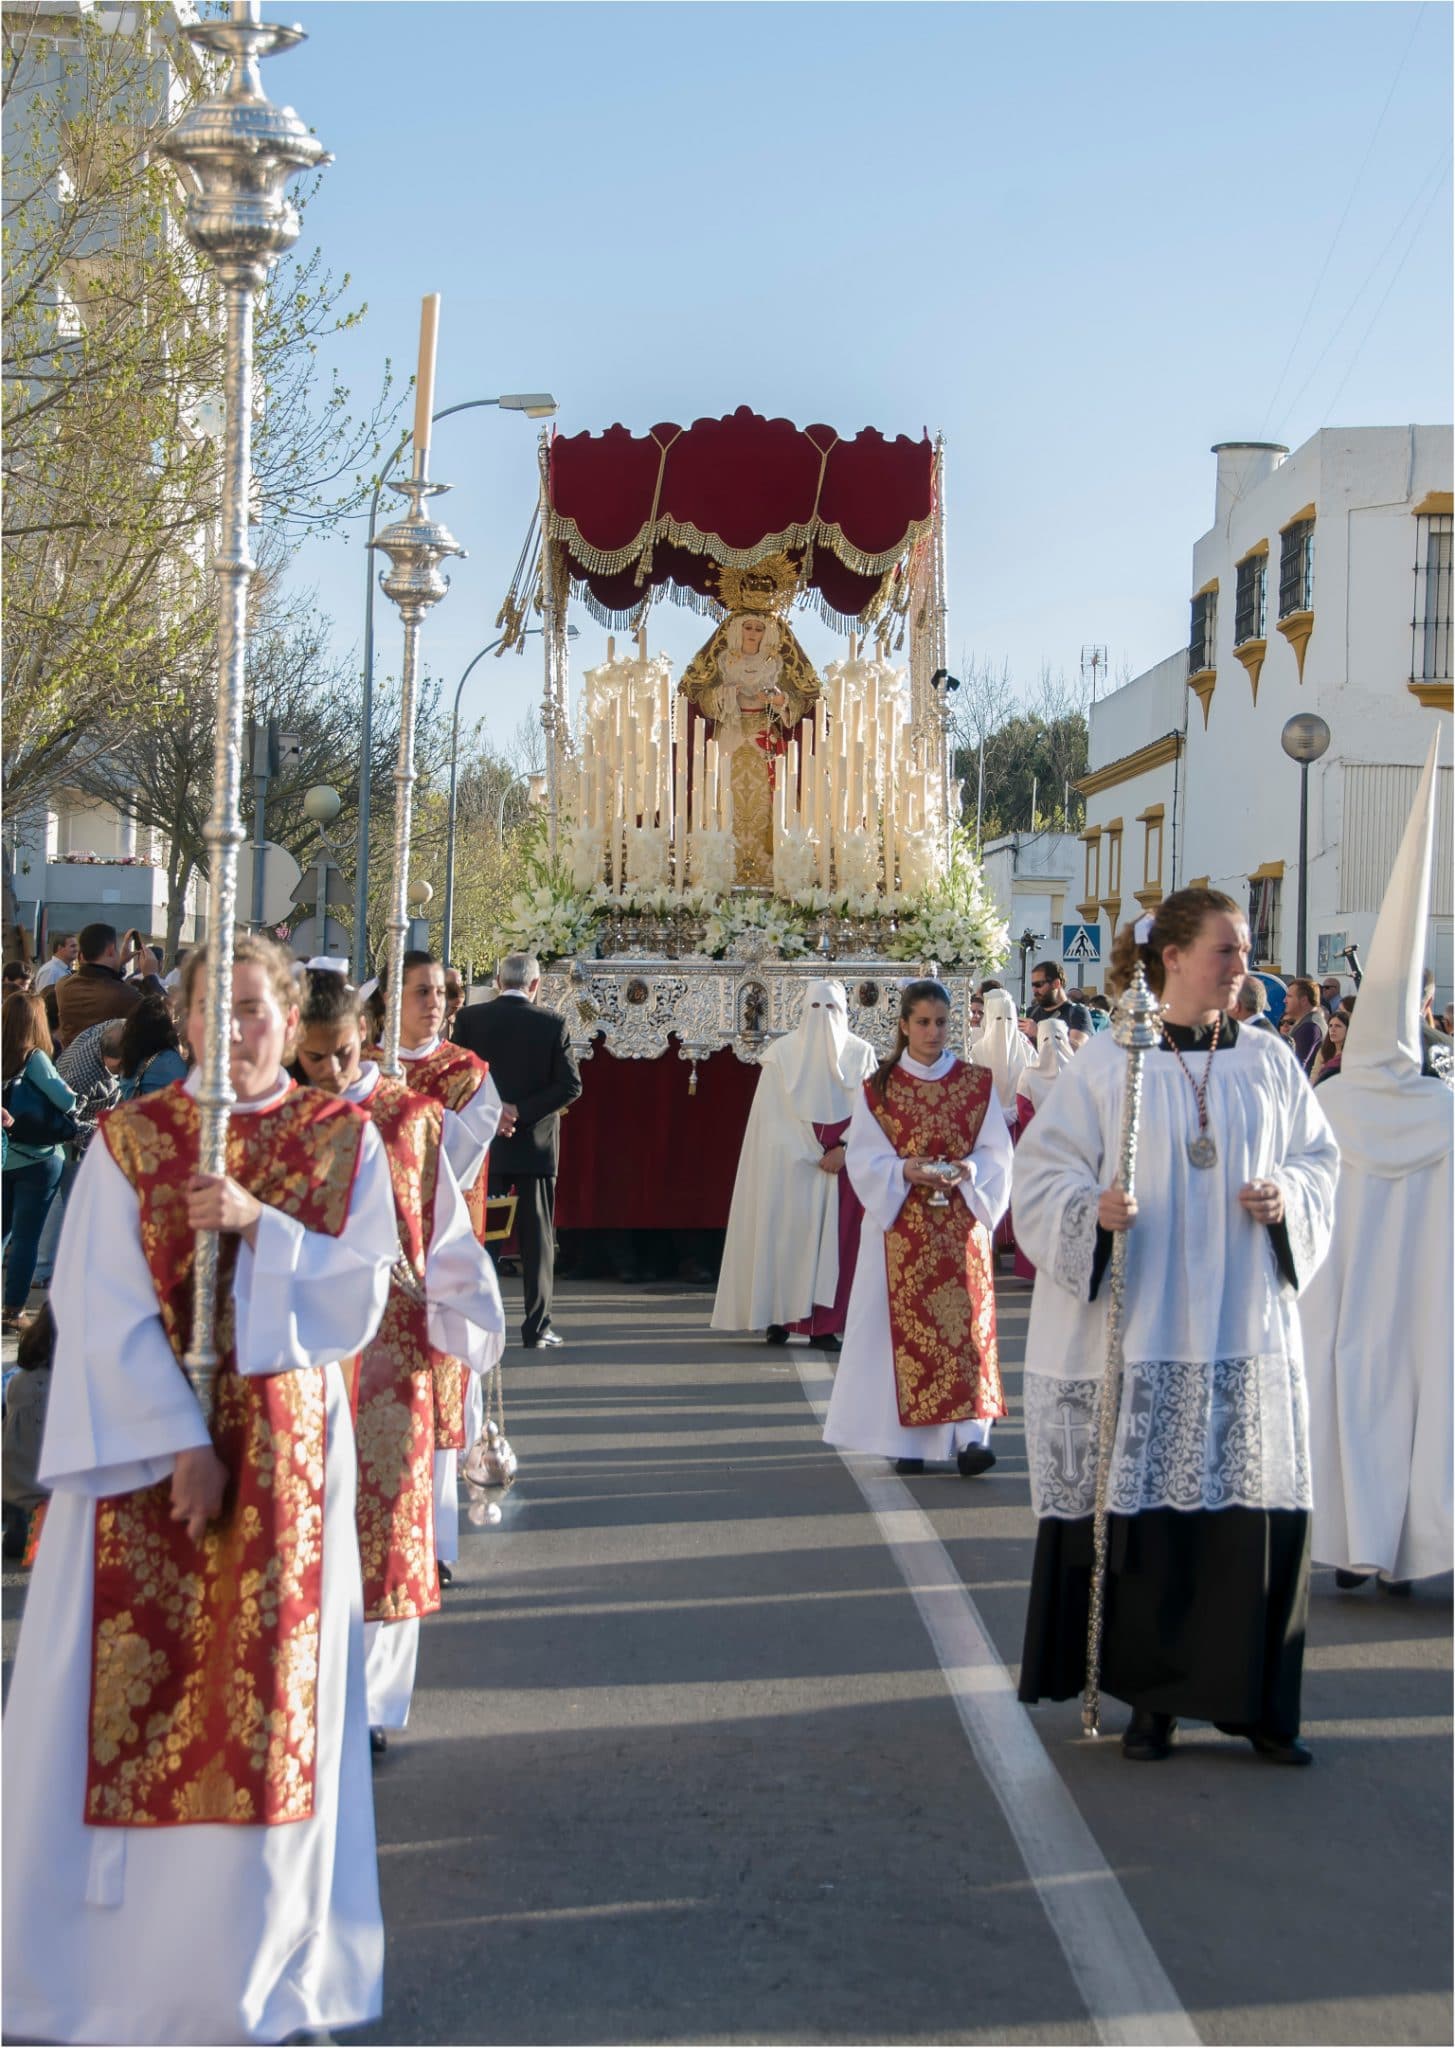 Semana Santa en San Fernando - Prendimiento